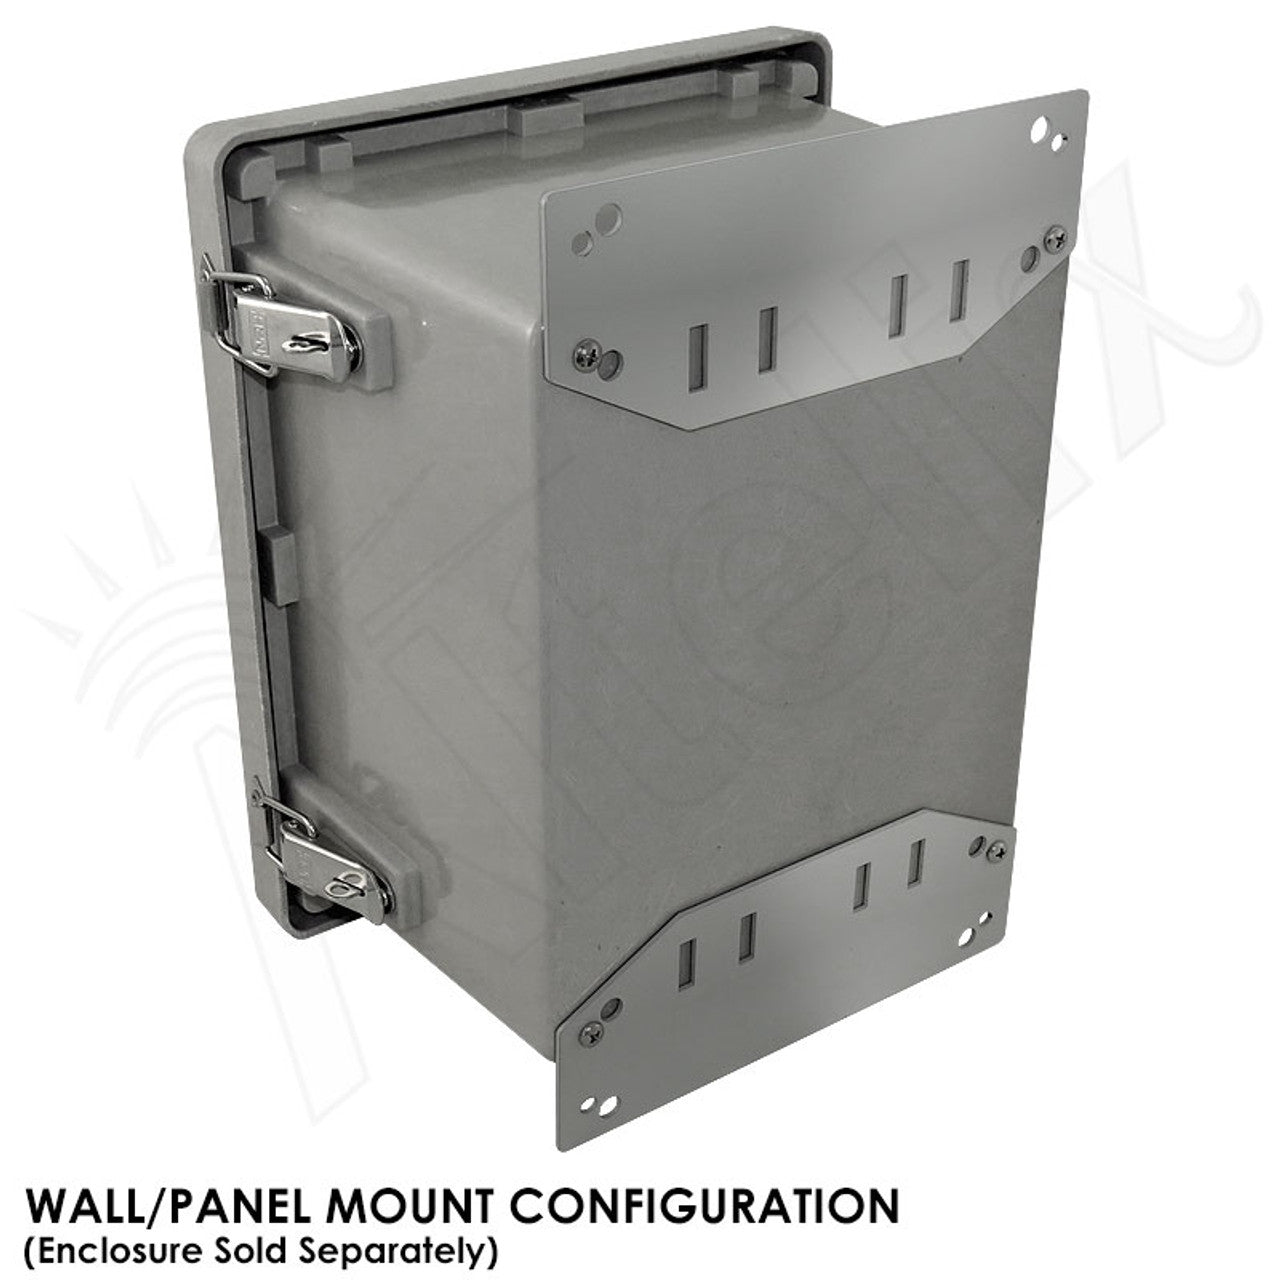 Stainless Steel Pole Mount / Flange Mount Kit for Altelix NF100806, NS080806 & NS100806 Series NEMA Enclosures - 0